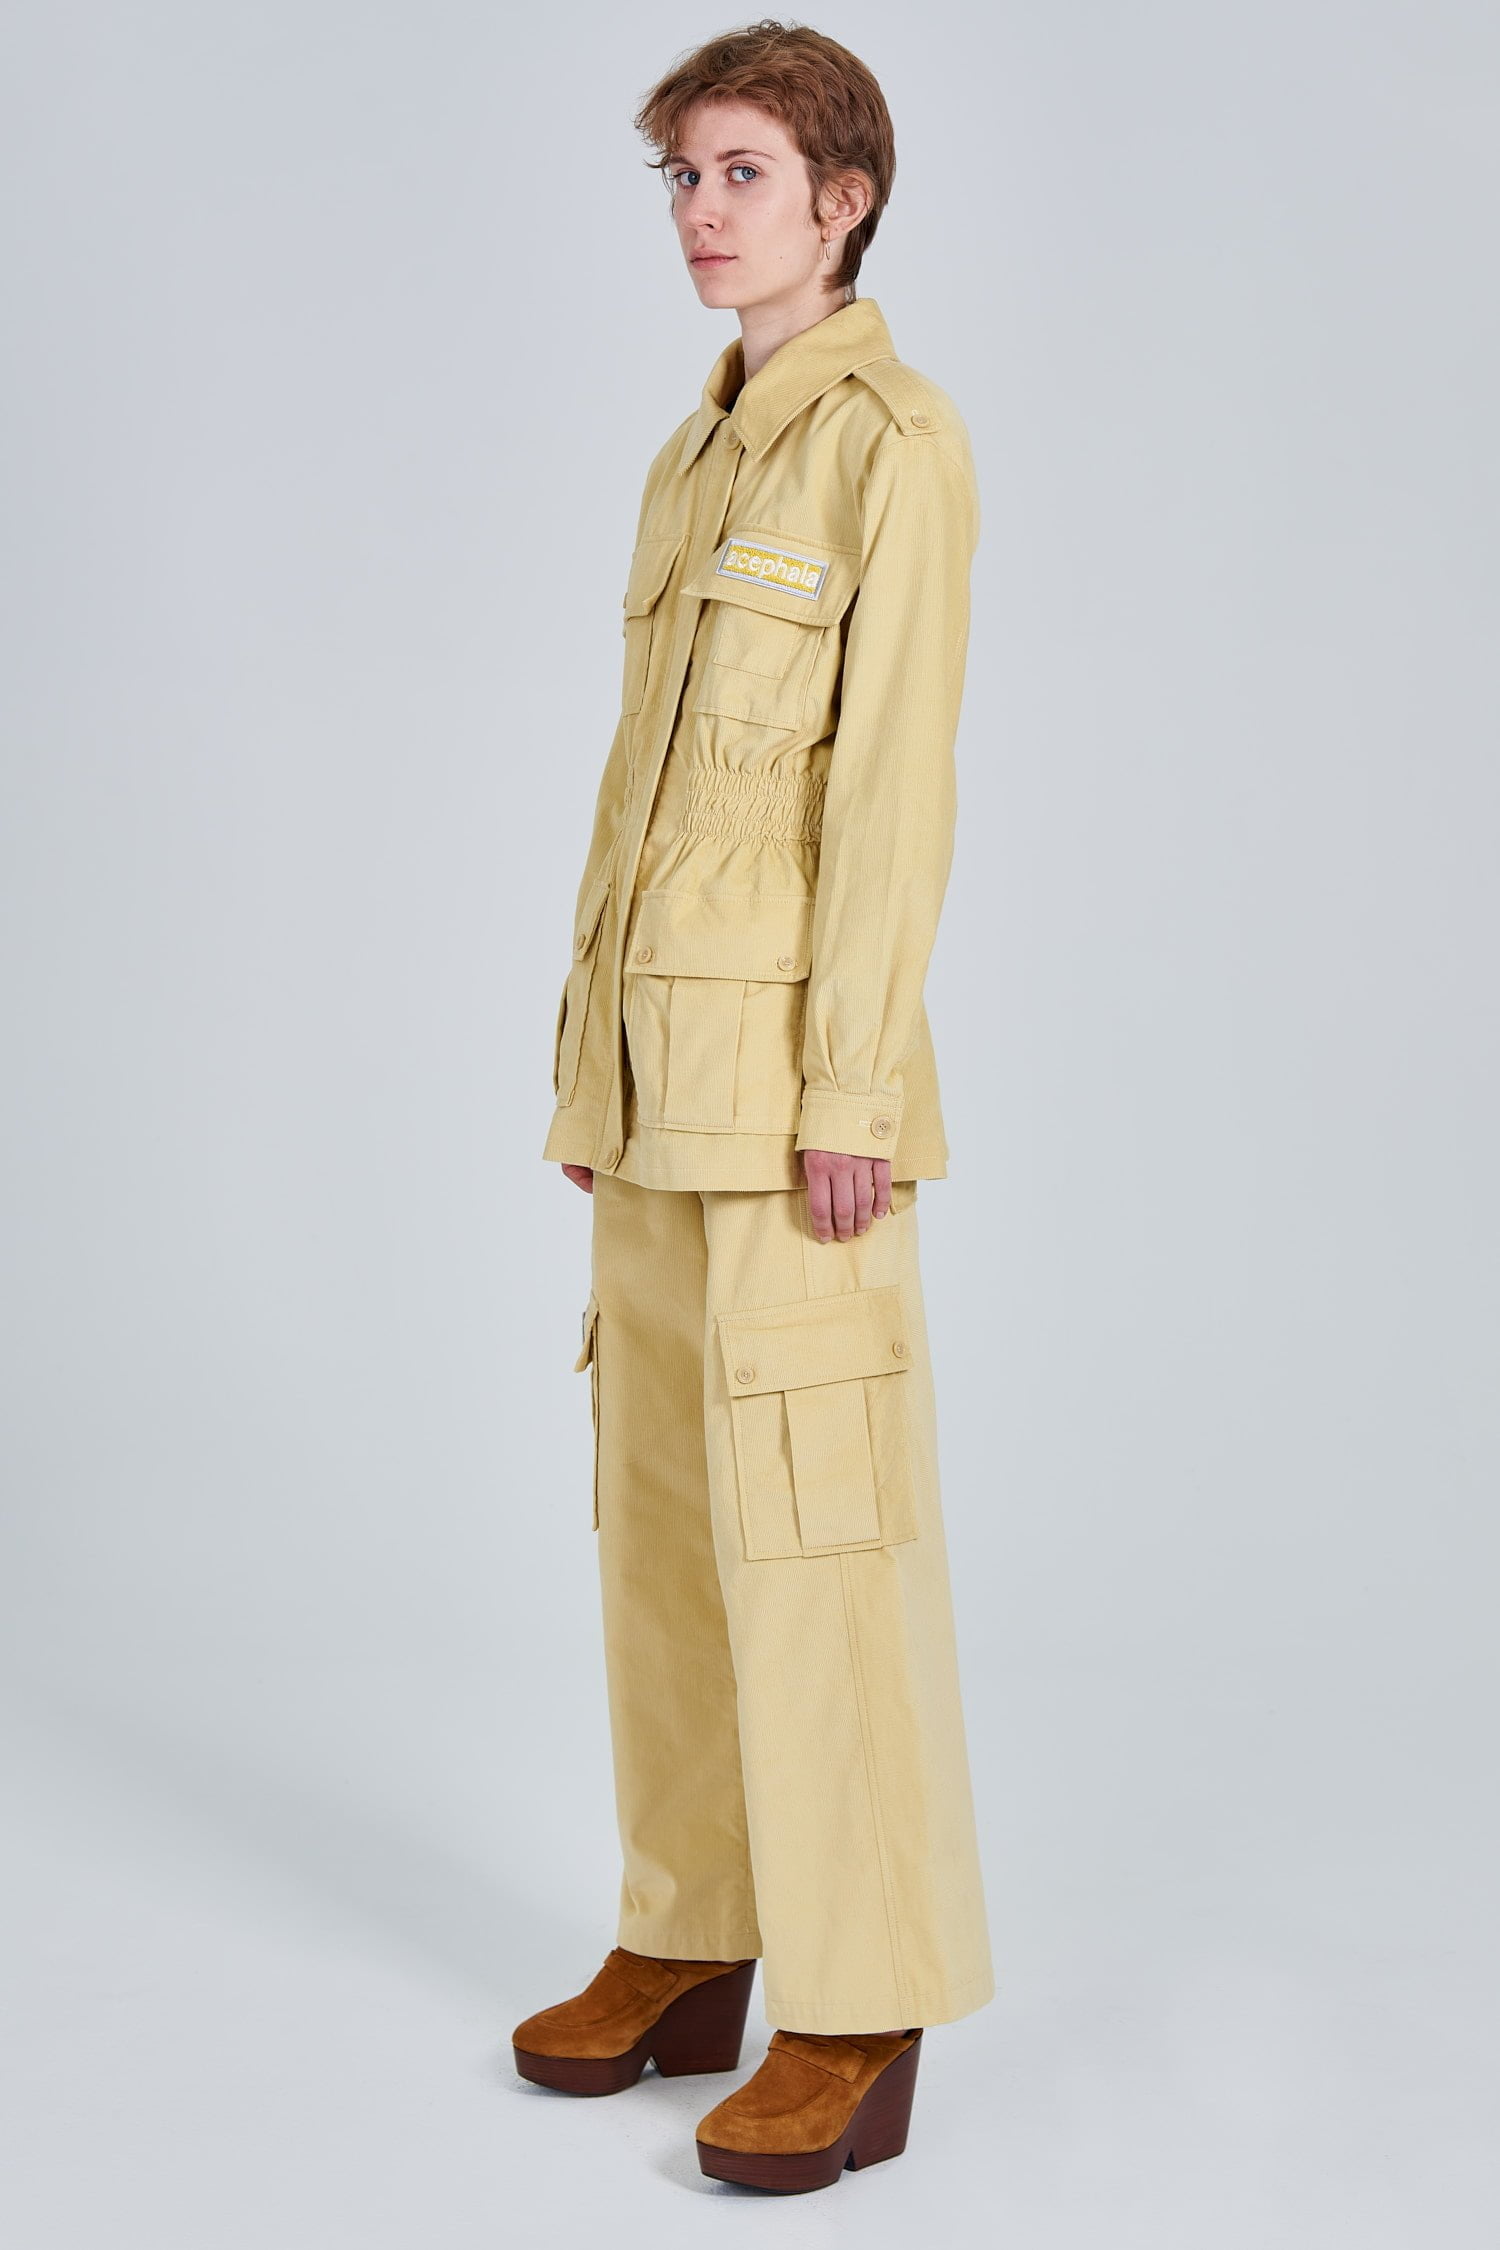 Acephala Fw 2020 21 Yellow Corduroy Trousers Jacket Female Front Side